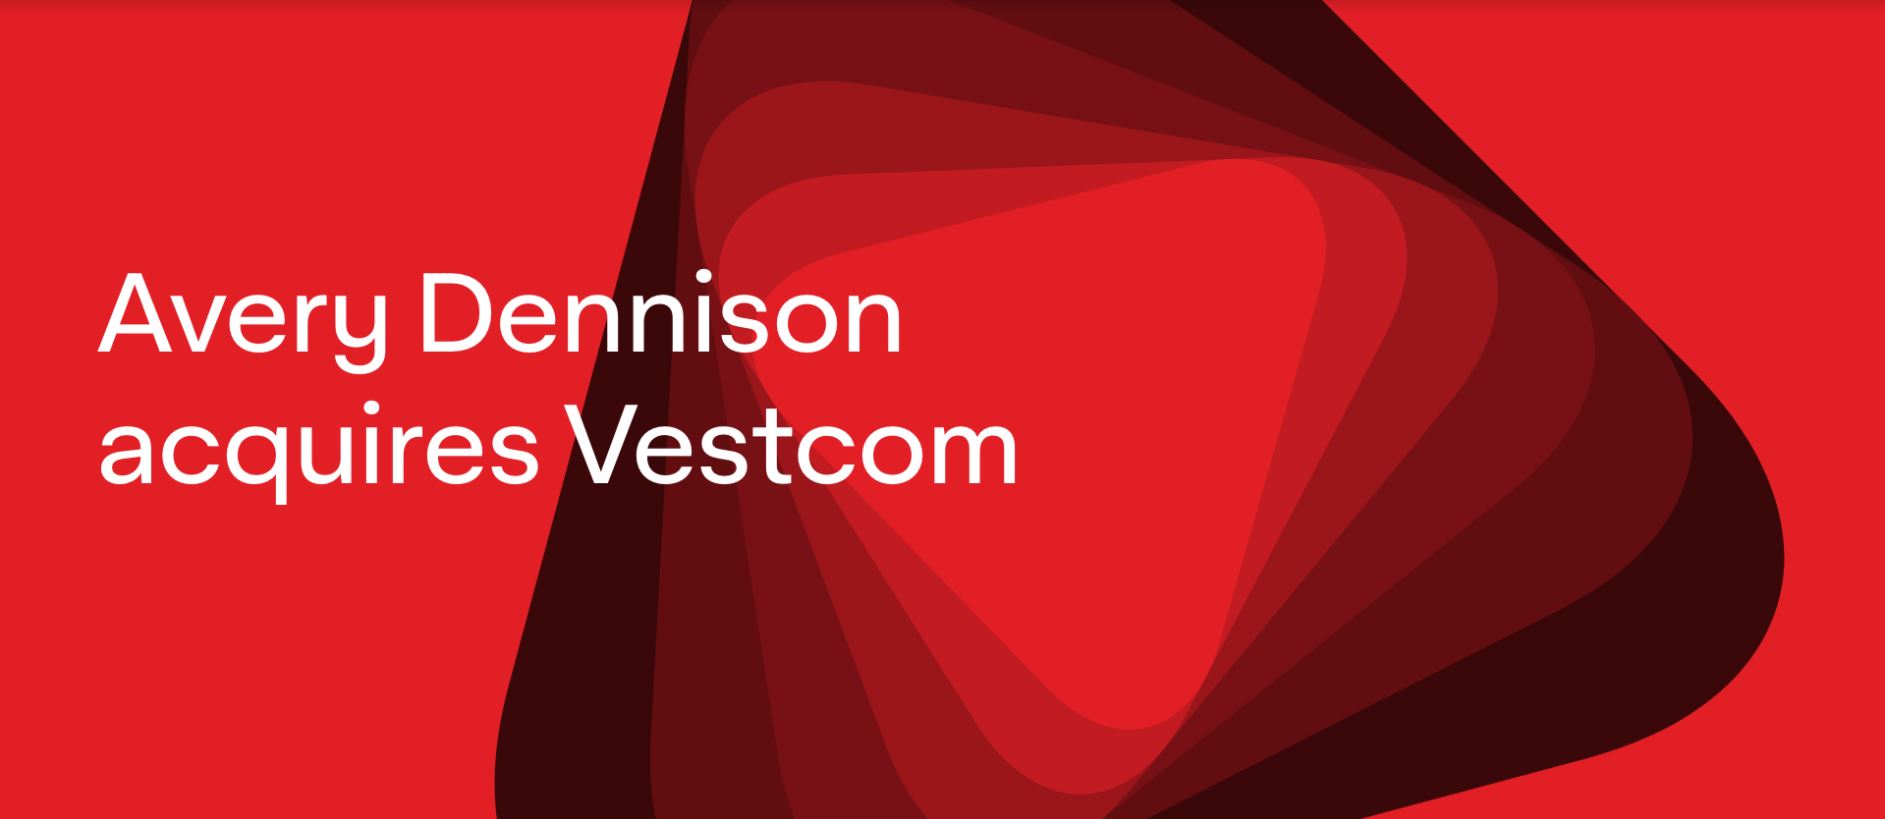 Avery Dennison to acquire Vestcom